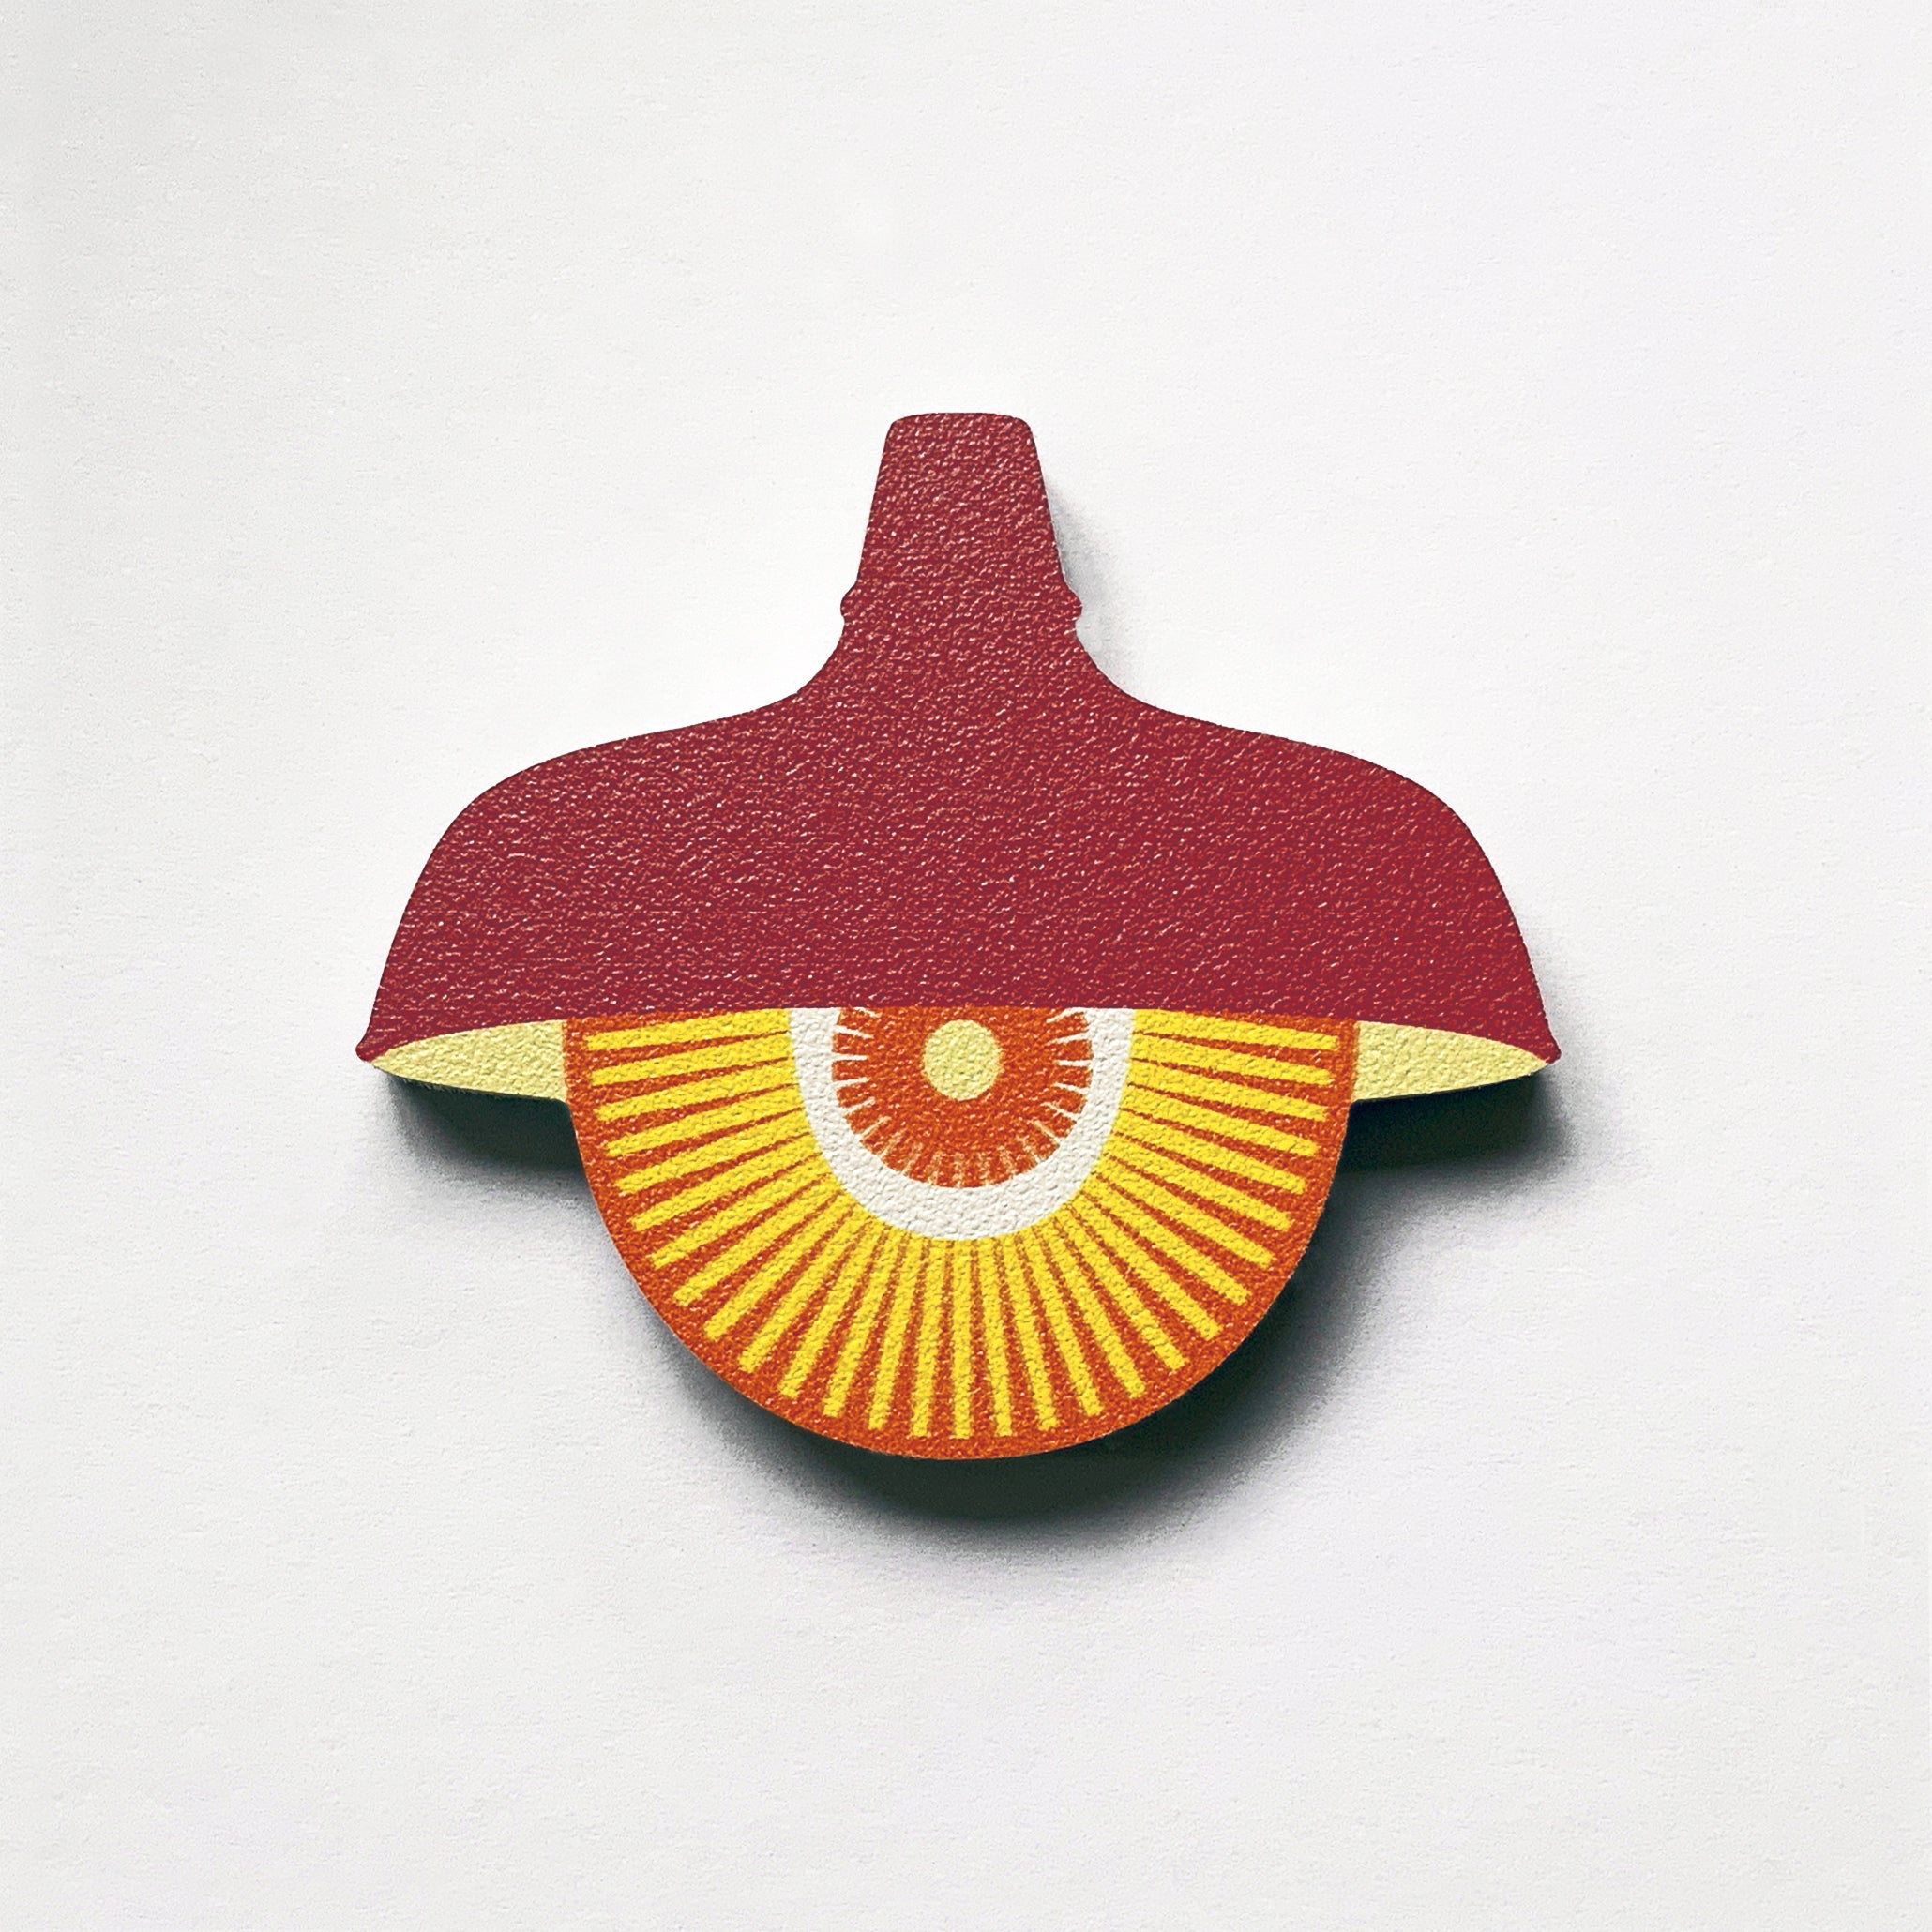 A red retro pendant light plywood fridge magnet by Beyond the Fridge